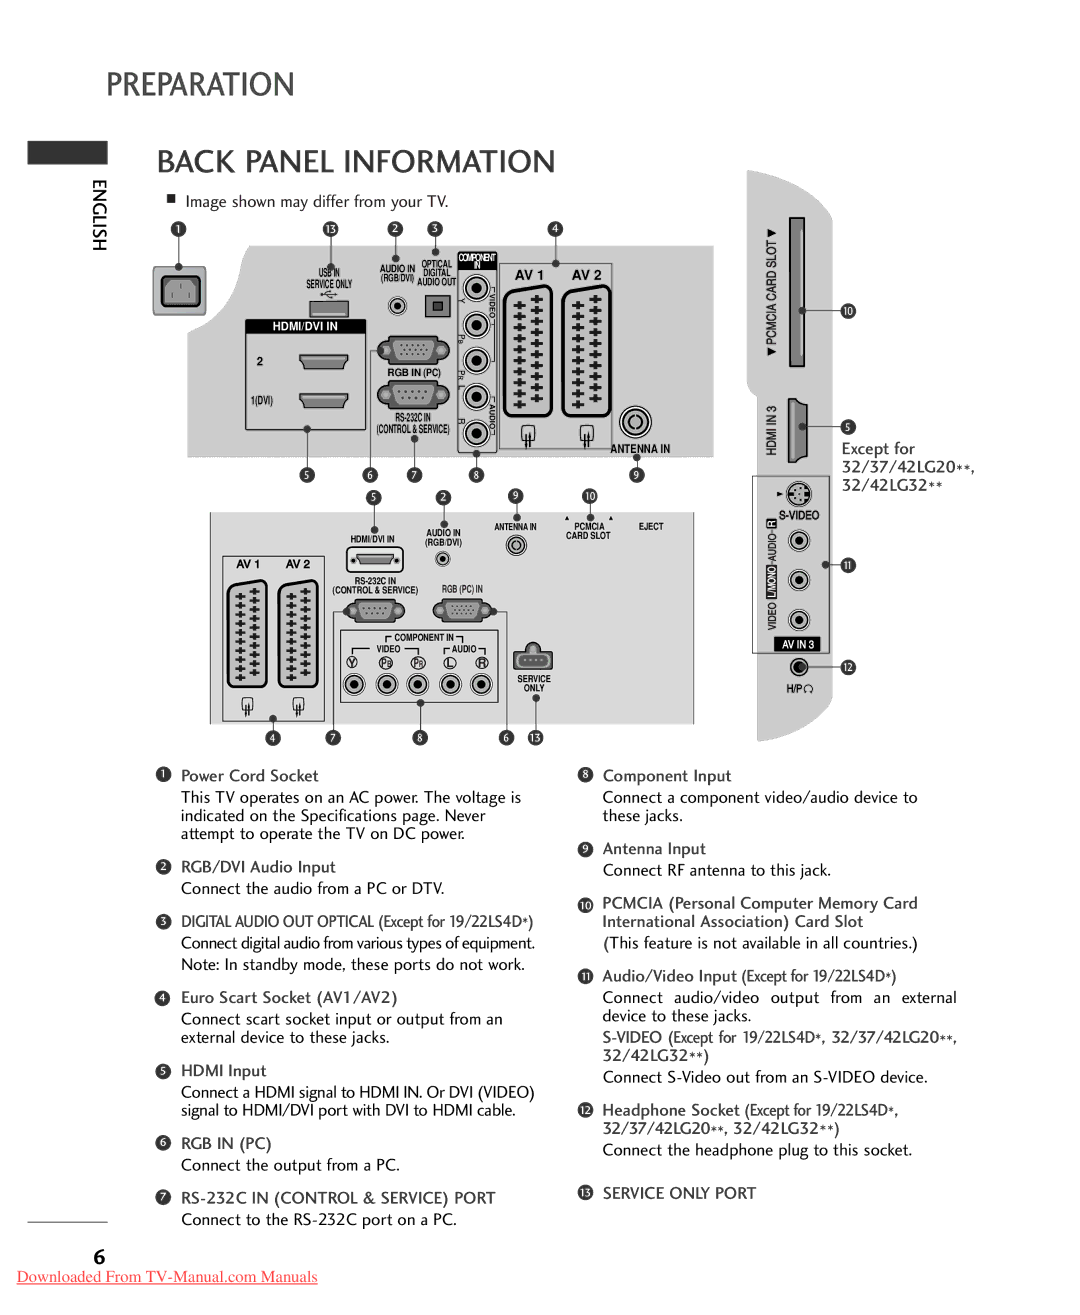 LG Electronics 32LG50* owner manual Preparation, Back Panel Information 